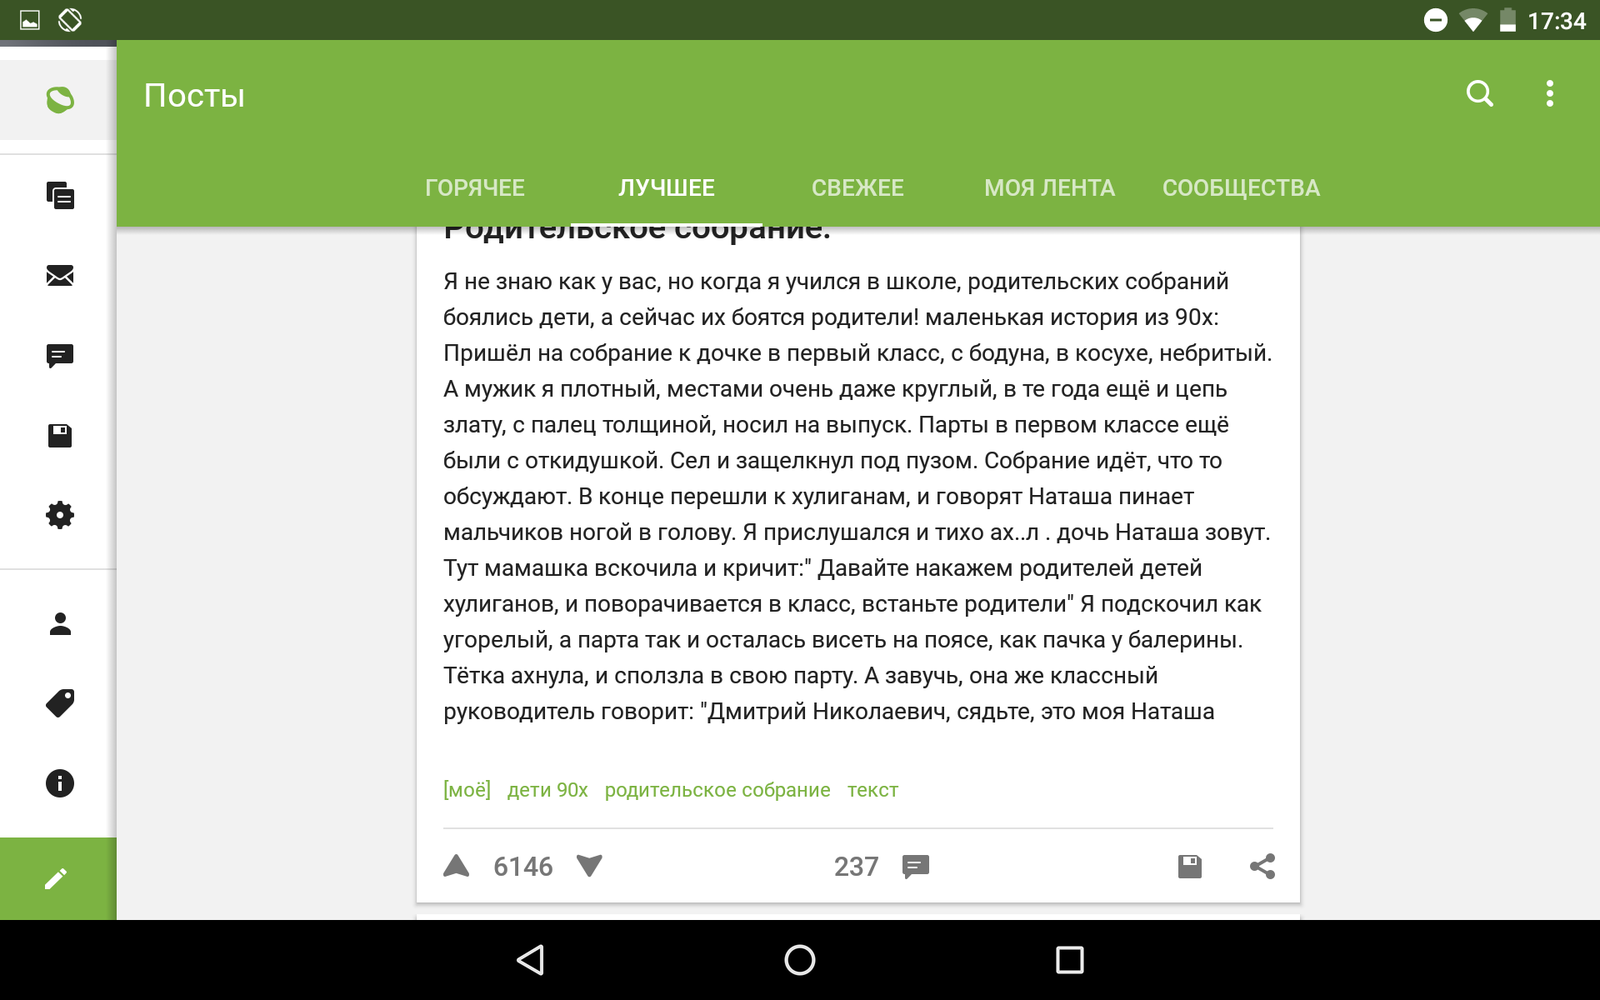 Bug in new app in landscape orientation - Android, Nexus 7, Bug, Peekaboo, Longpost